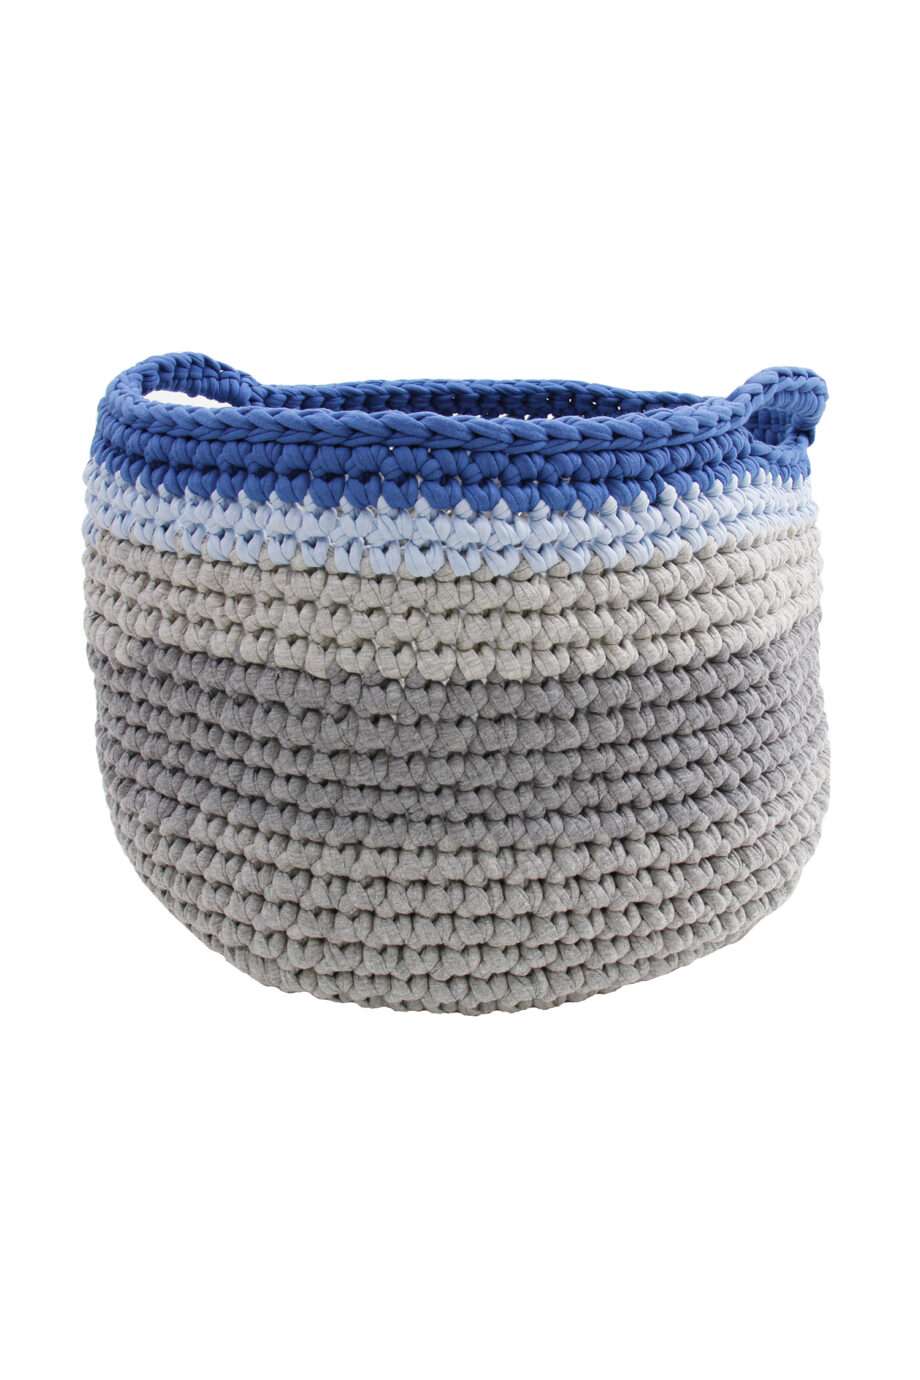 groovy jeans blue crochet cotton basket xlarge